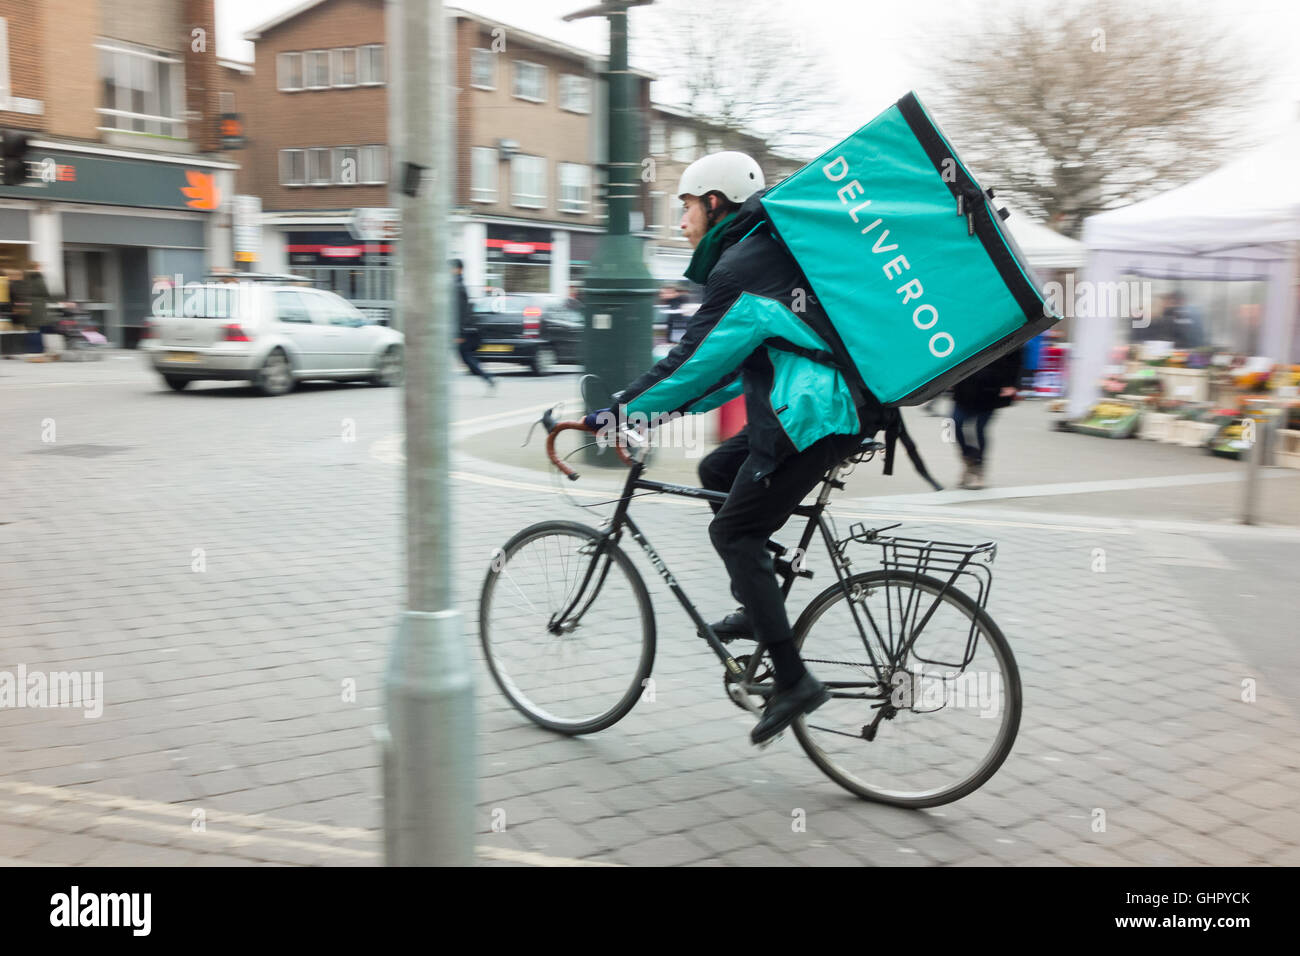 Deliveroo  - Deliveroo bicycle courier delivering restaurant food in Exeter, Devon, UK Stock Photo